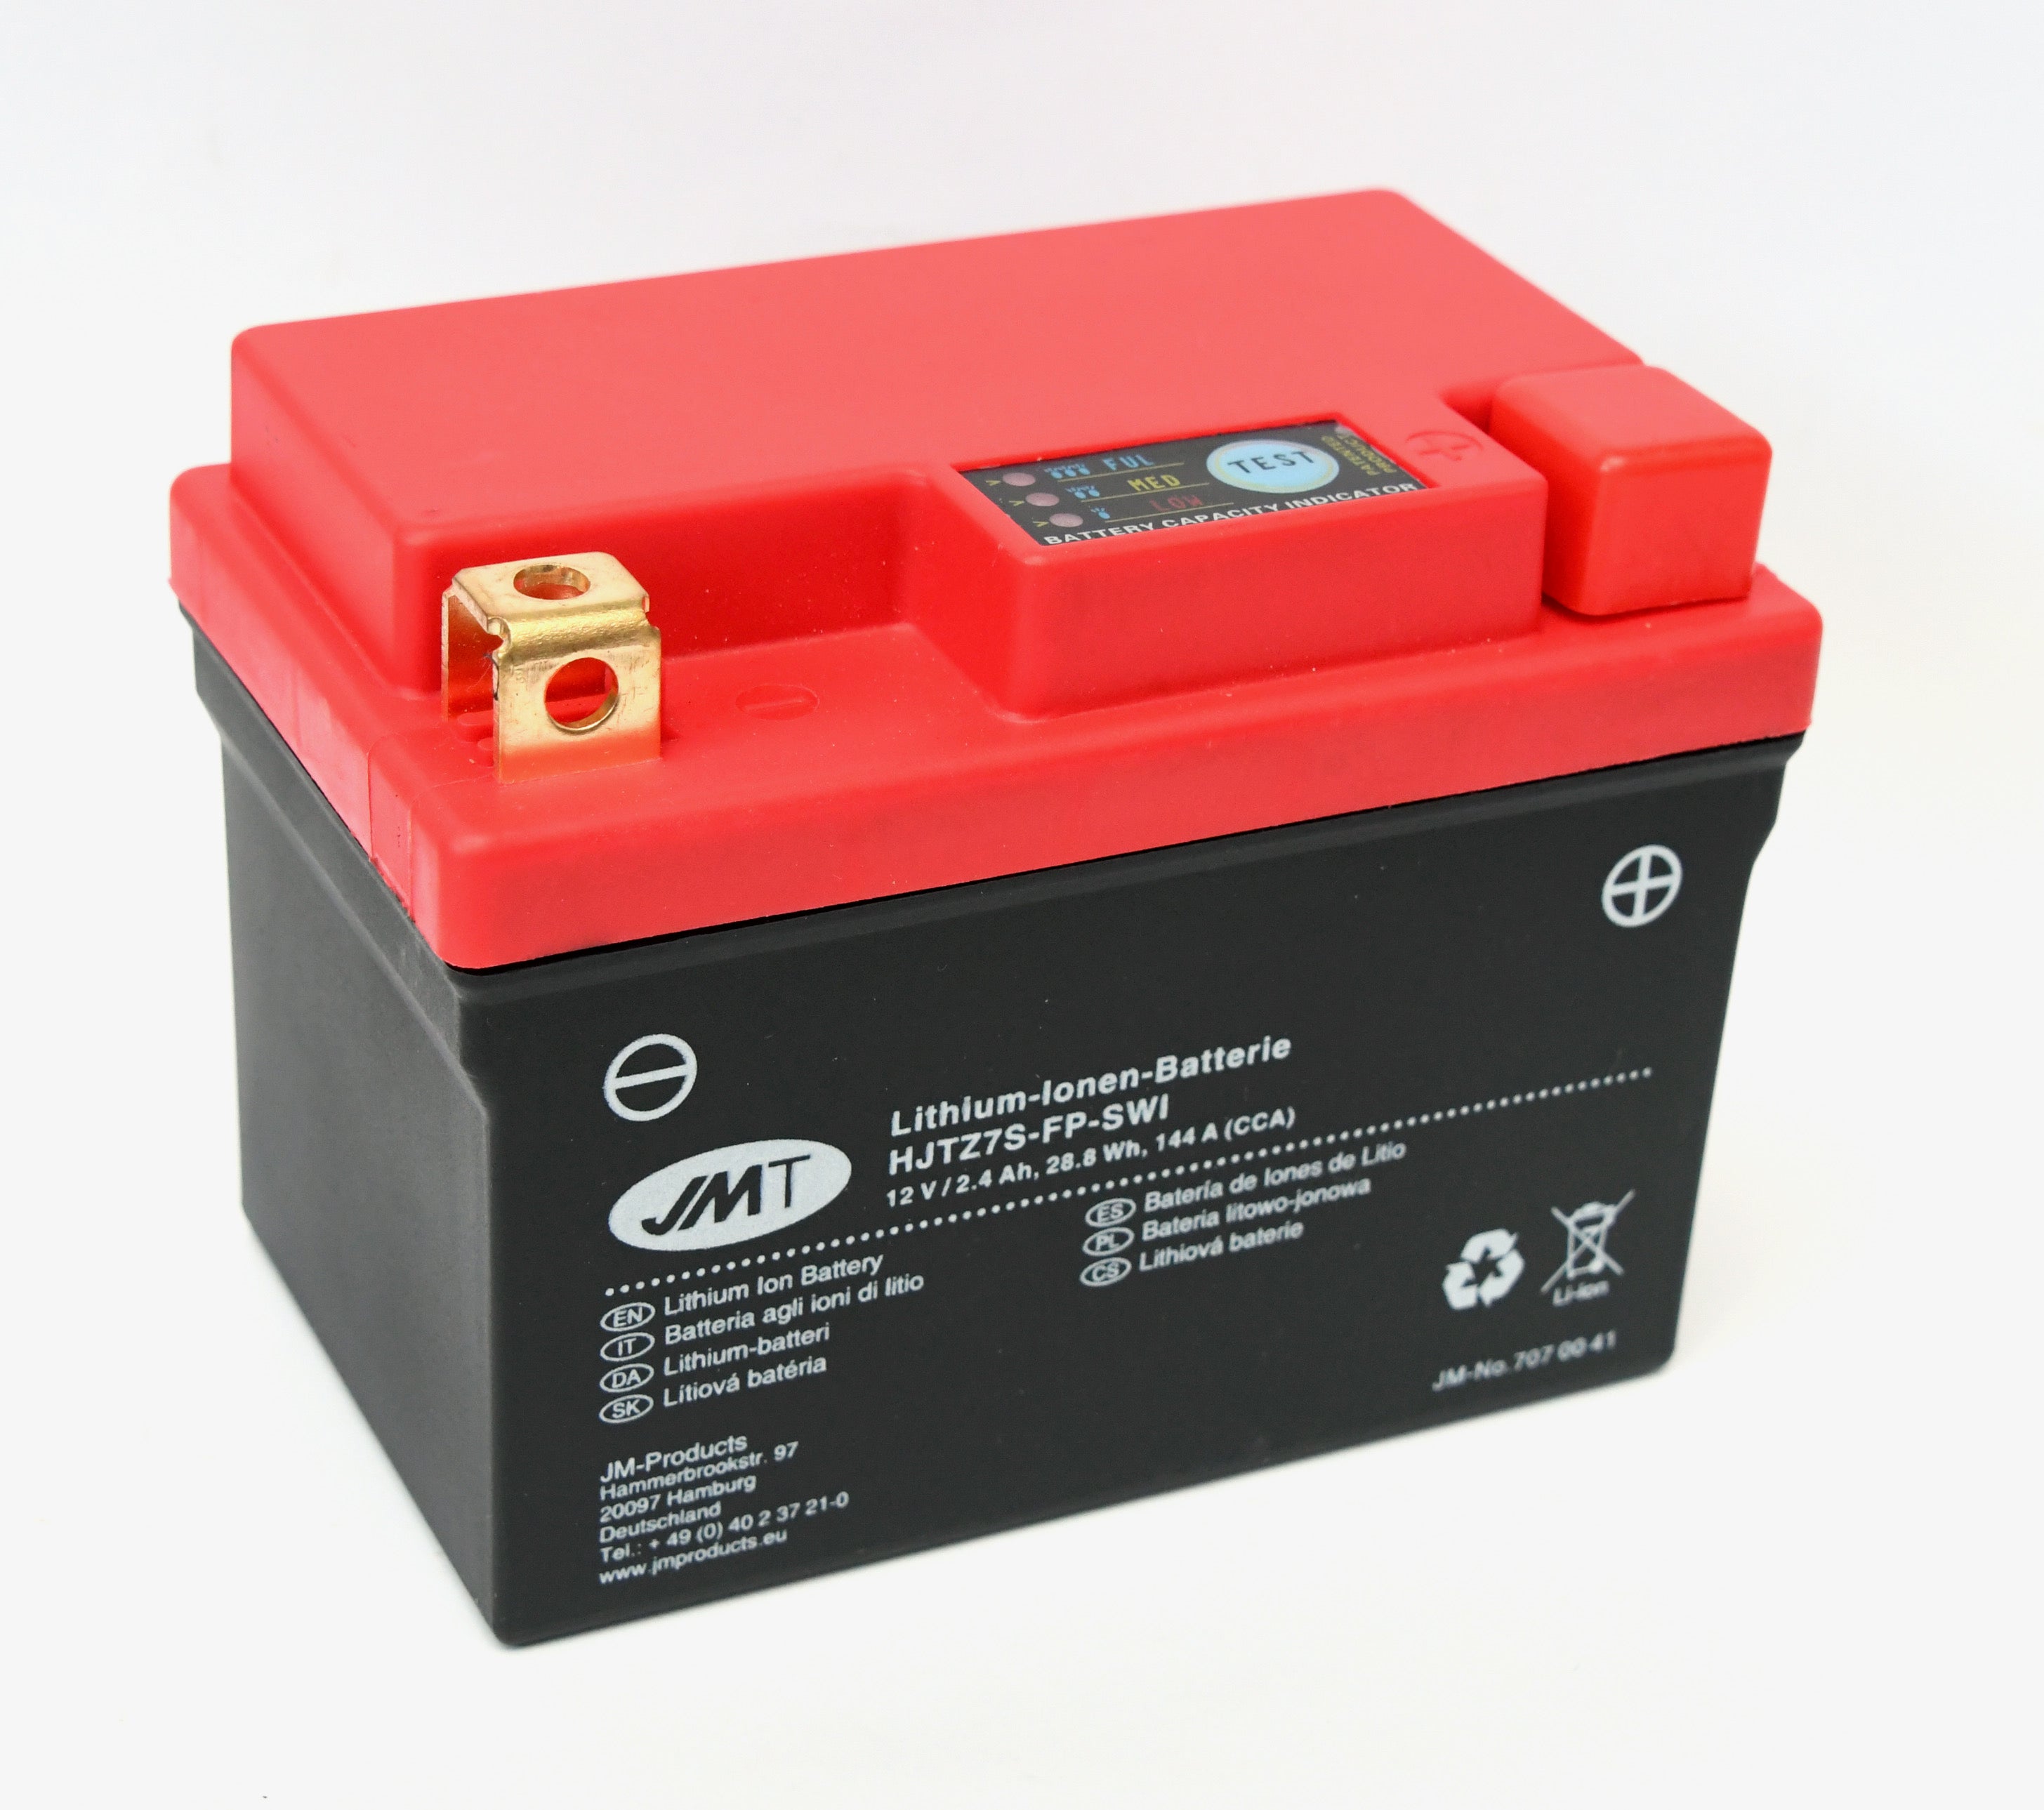 JMT Lithium Ion Battery HJTZ7S-FP-SWI